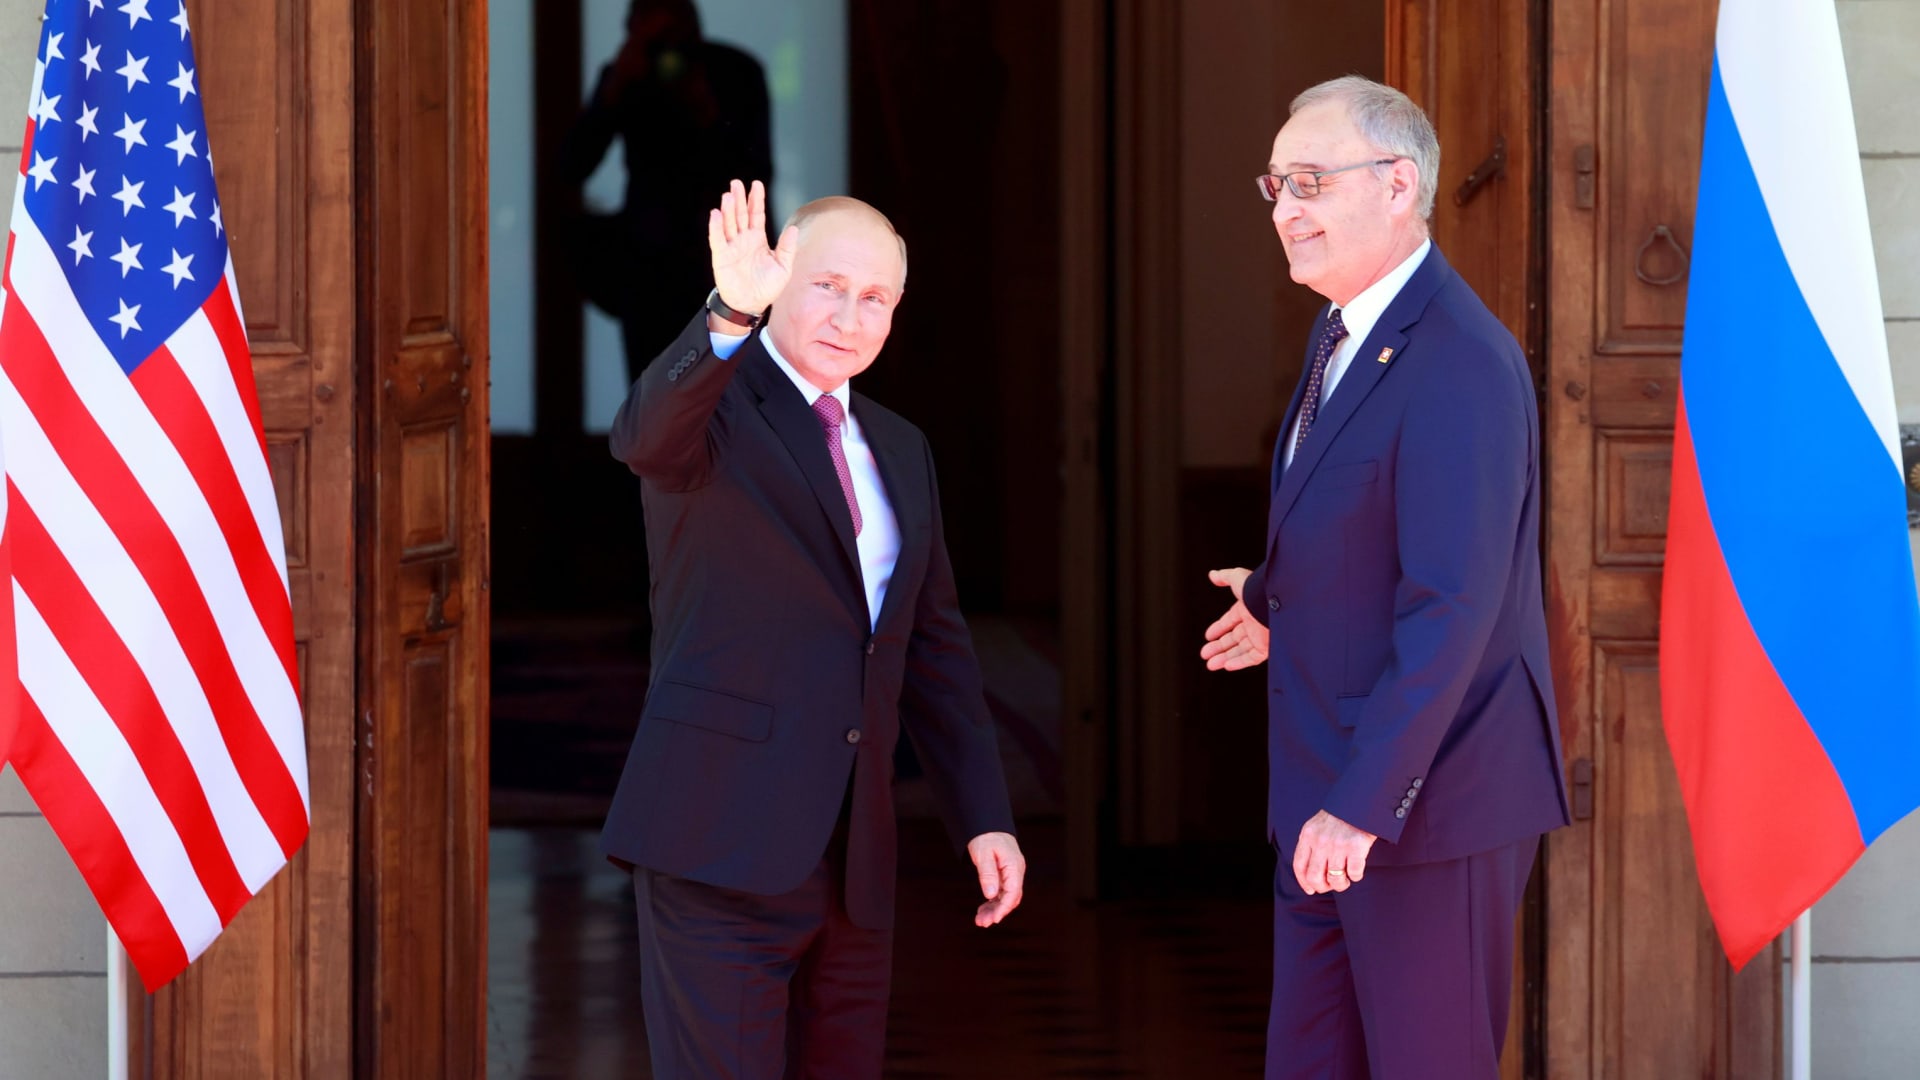 Russia's President Vladimir Putin waves next to Swiss President Guy Parmelin as he arrives at Villa La Grange for the U.S.-Russia summit, in Geneva, Switzerland, June 16, 2021.